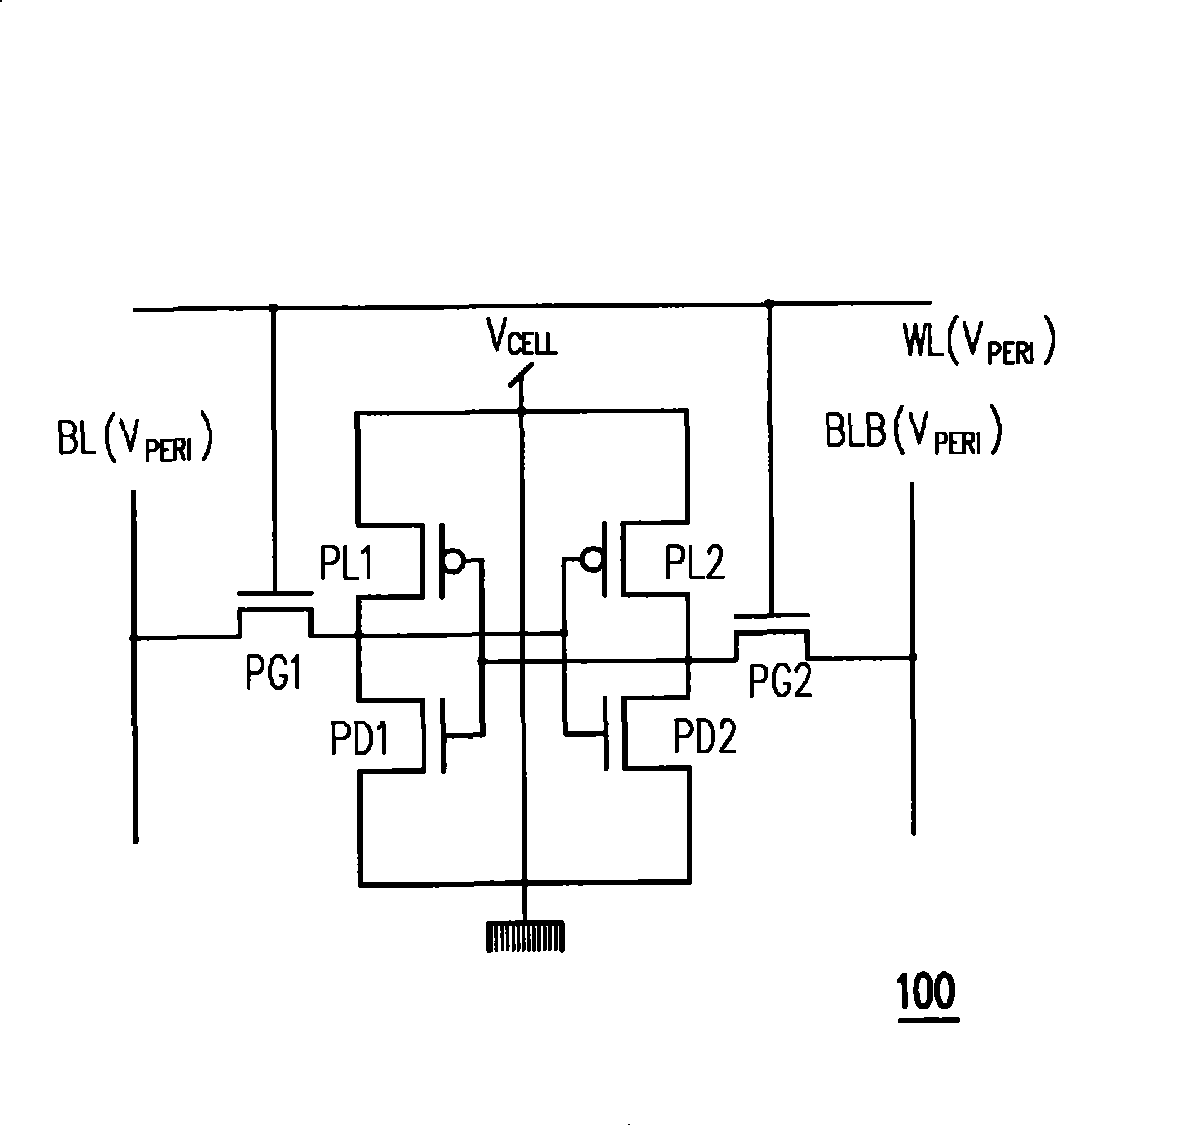 Adjusting method for operating voltage of SRAM (static random access memory)